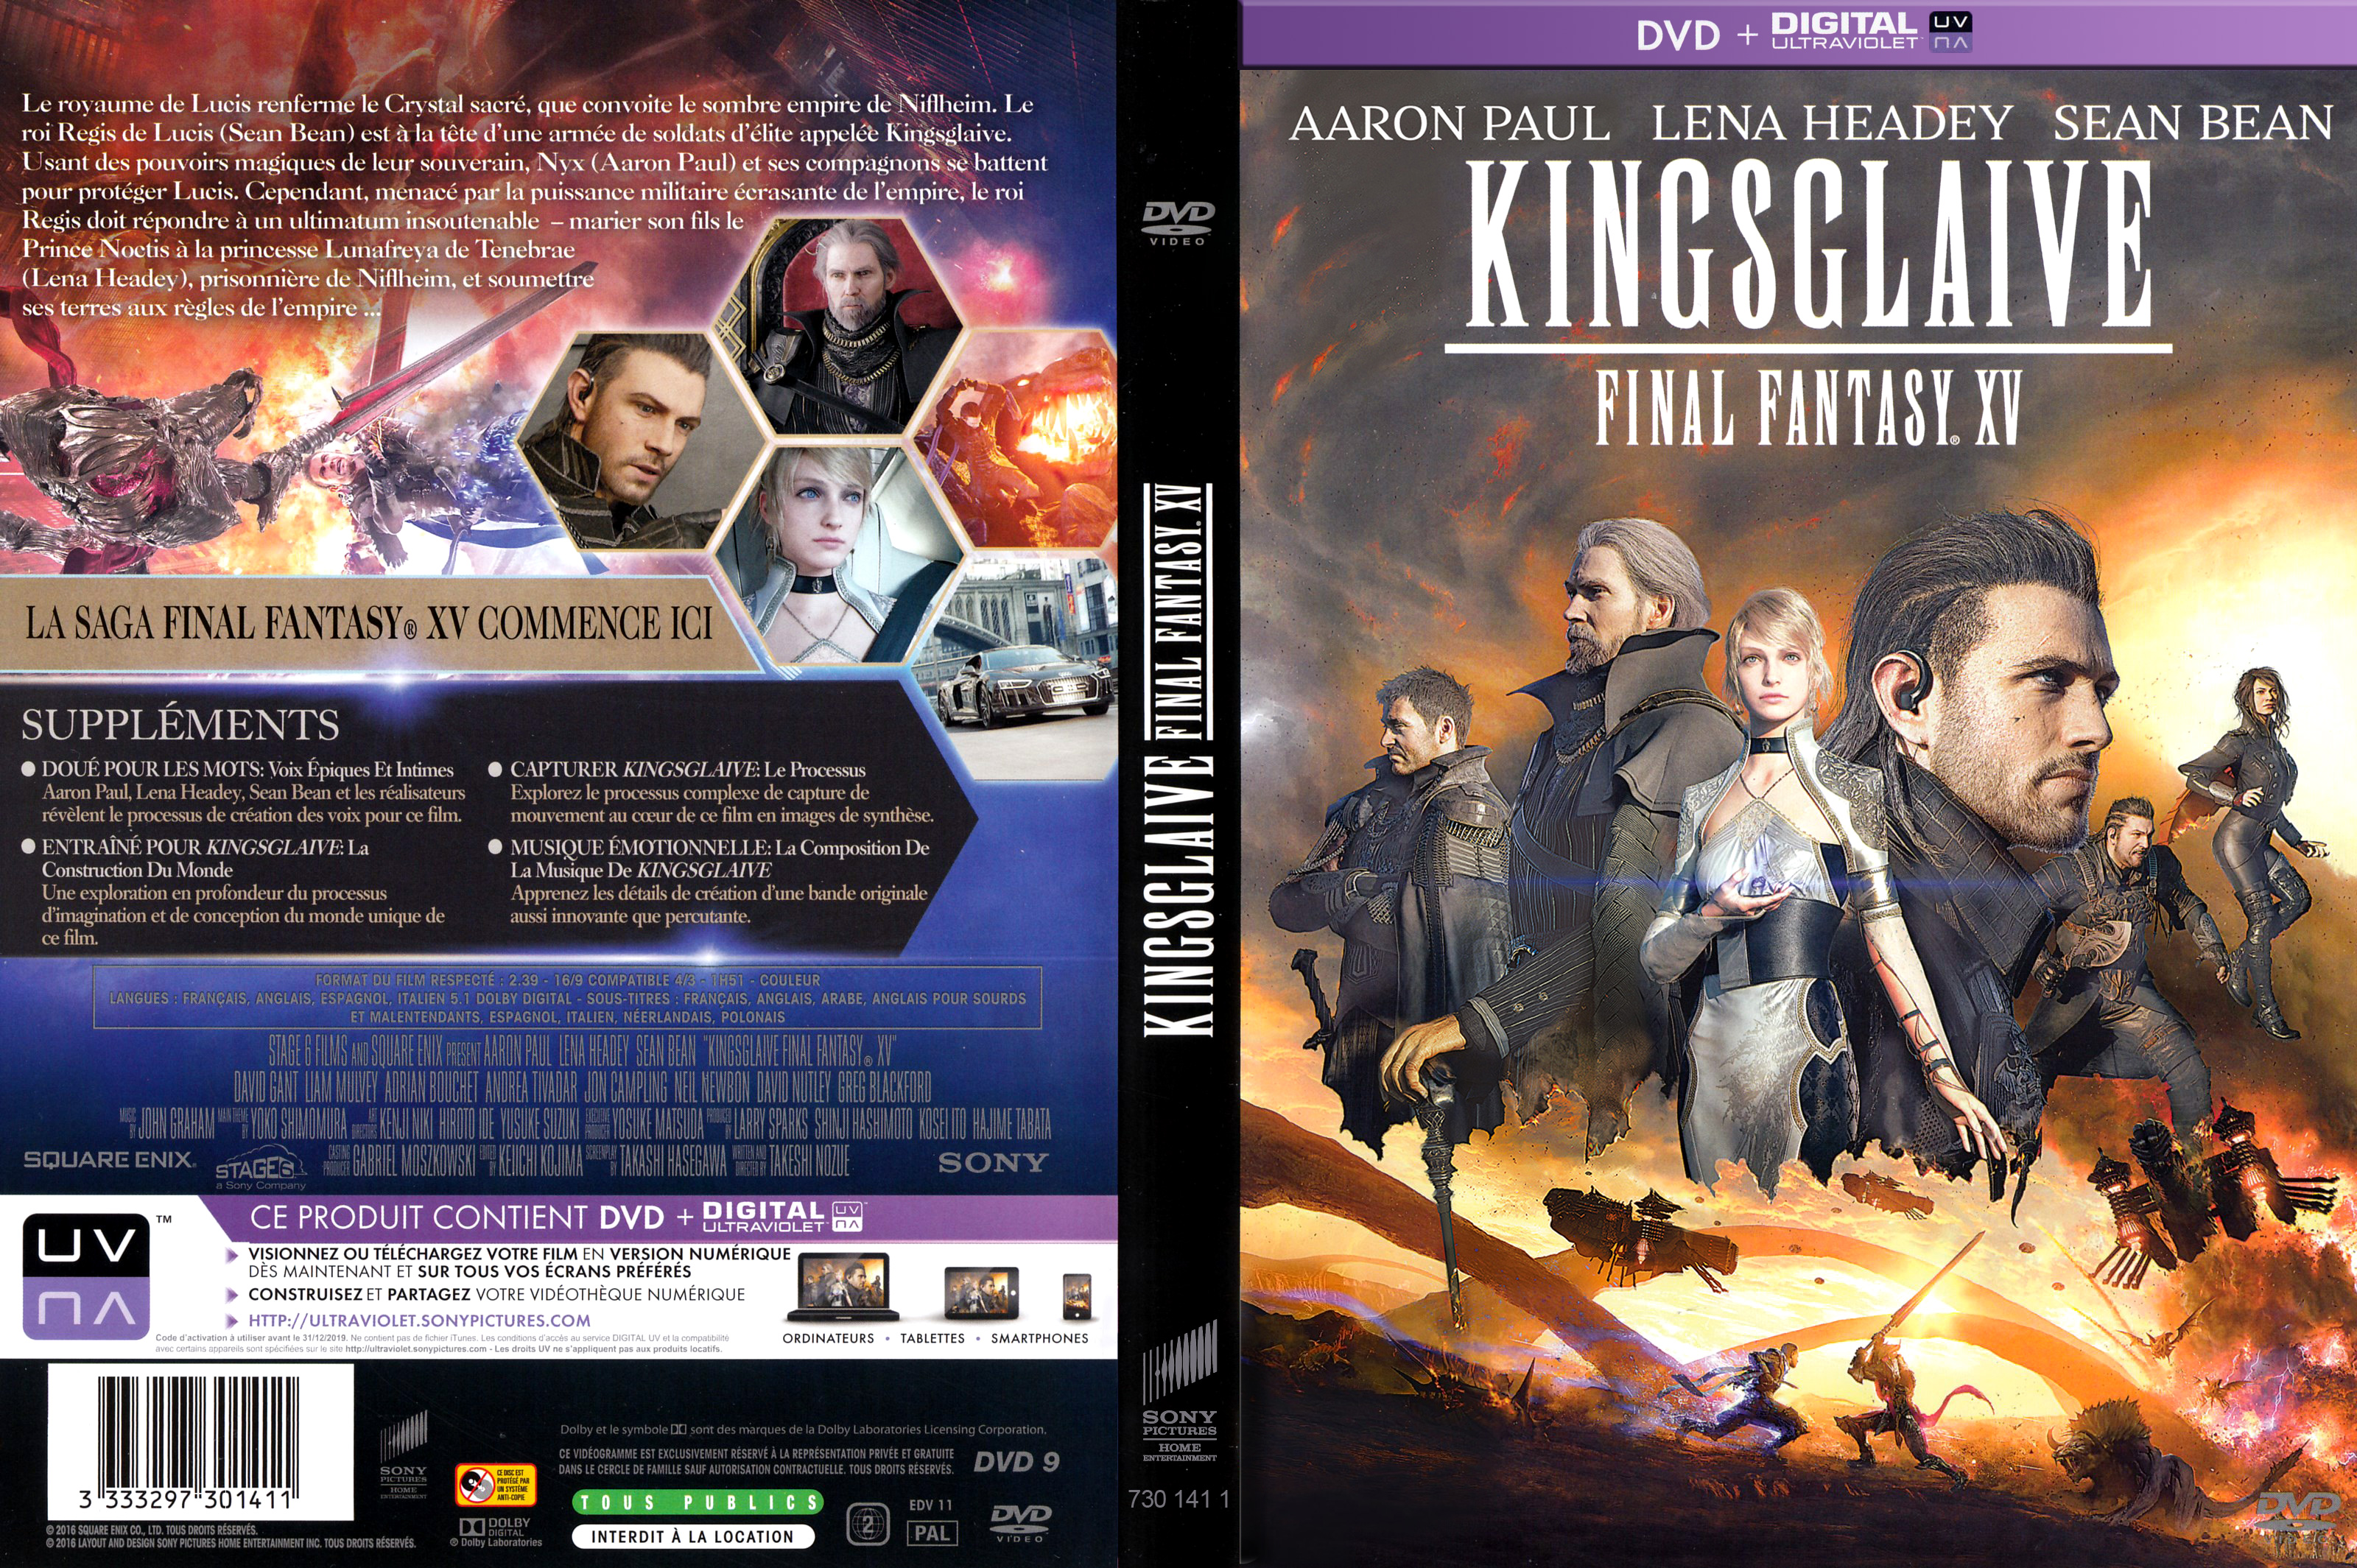 Jaquette DVD Kingsglaive Final Fantasy XV